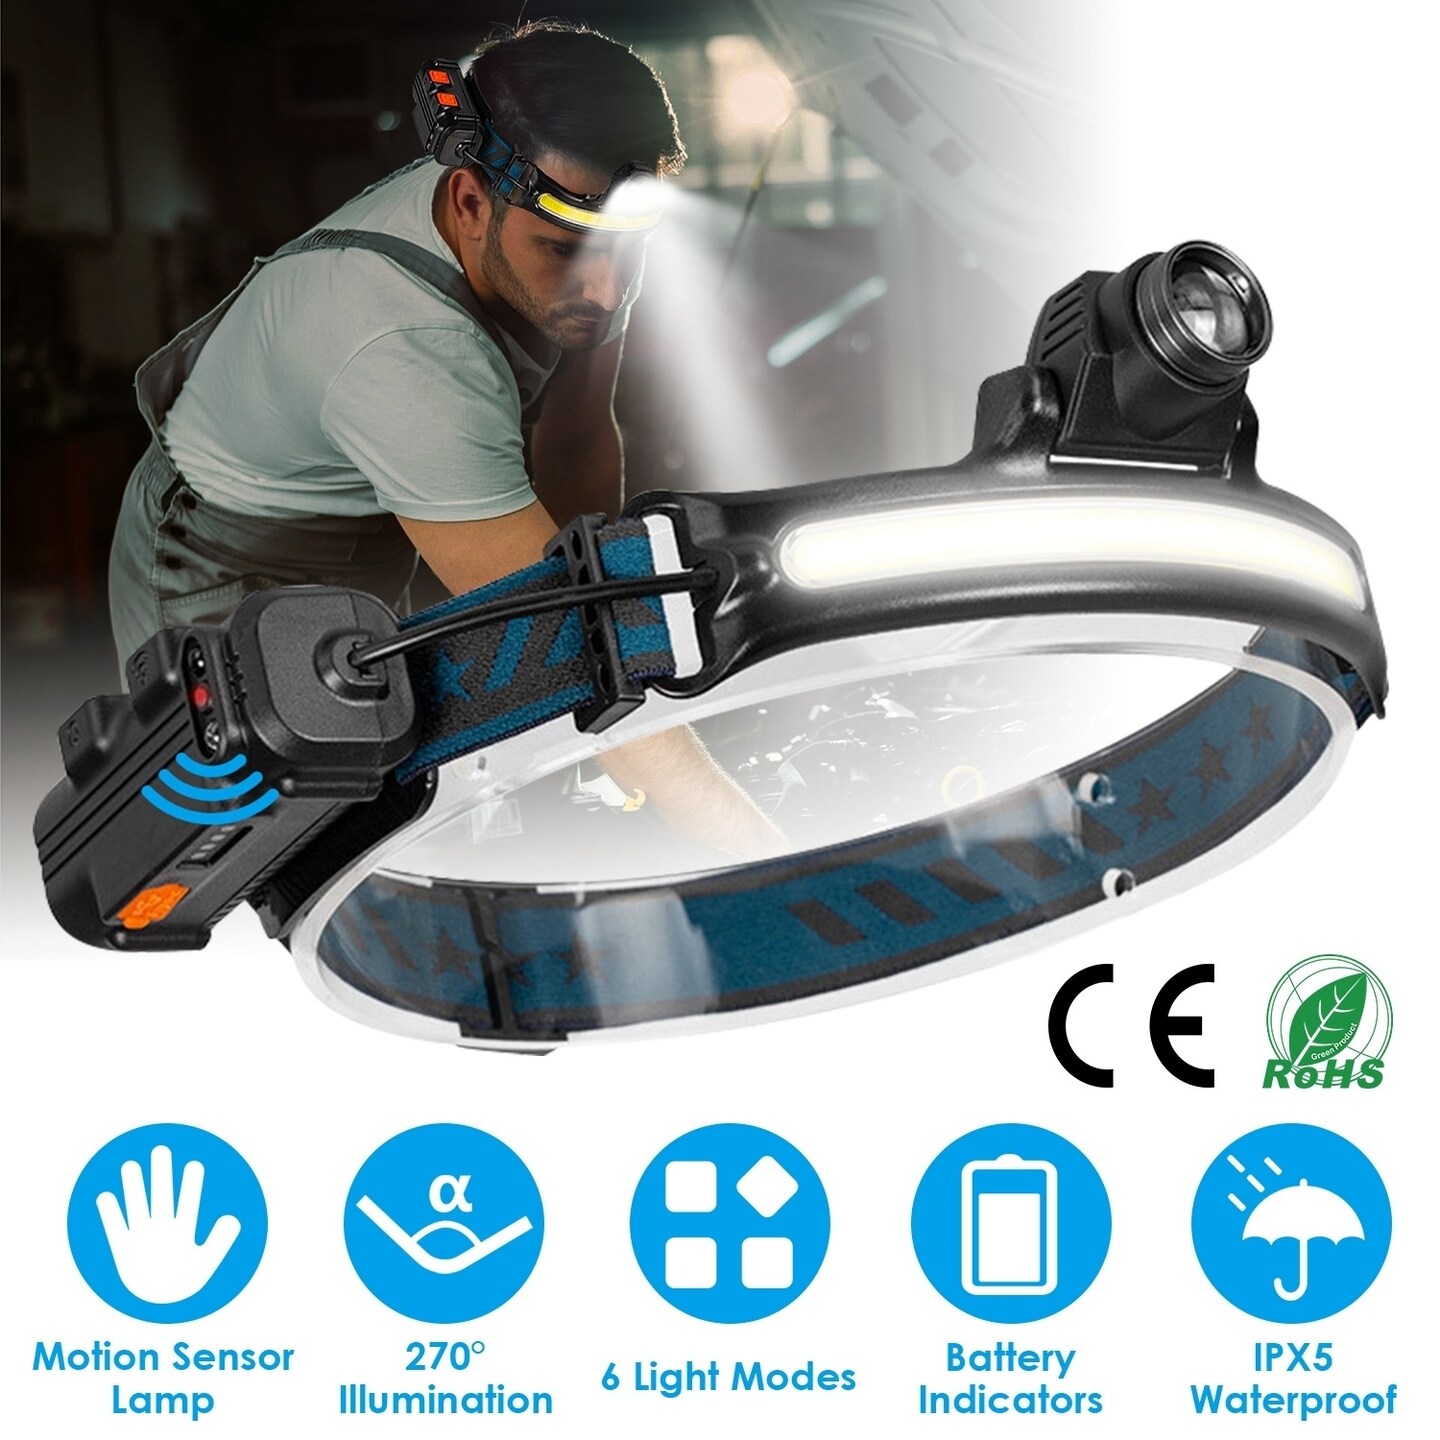 Global Phoenix Rechargeable Motion Sensor Head Lamp 6 Light Modes COB XPG Head Light Torch Flashlight 270 Beam IPX5 Waterproof for